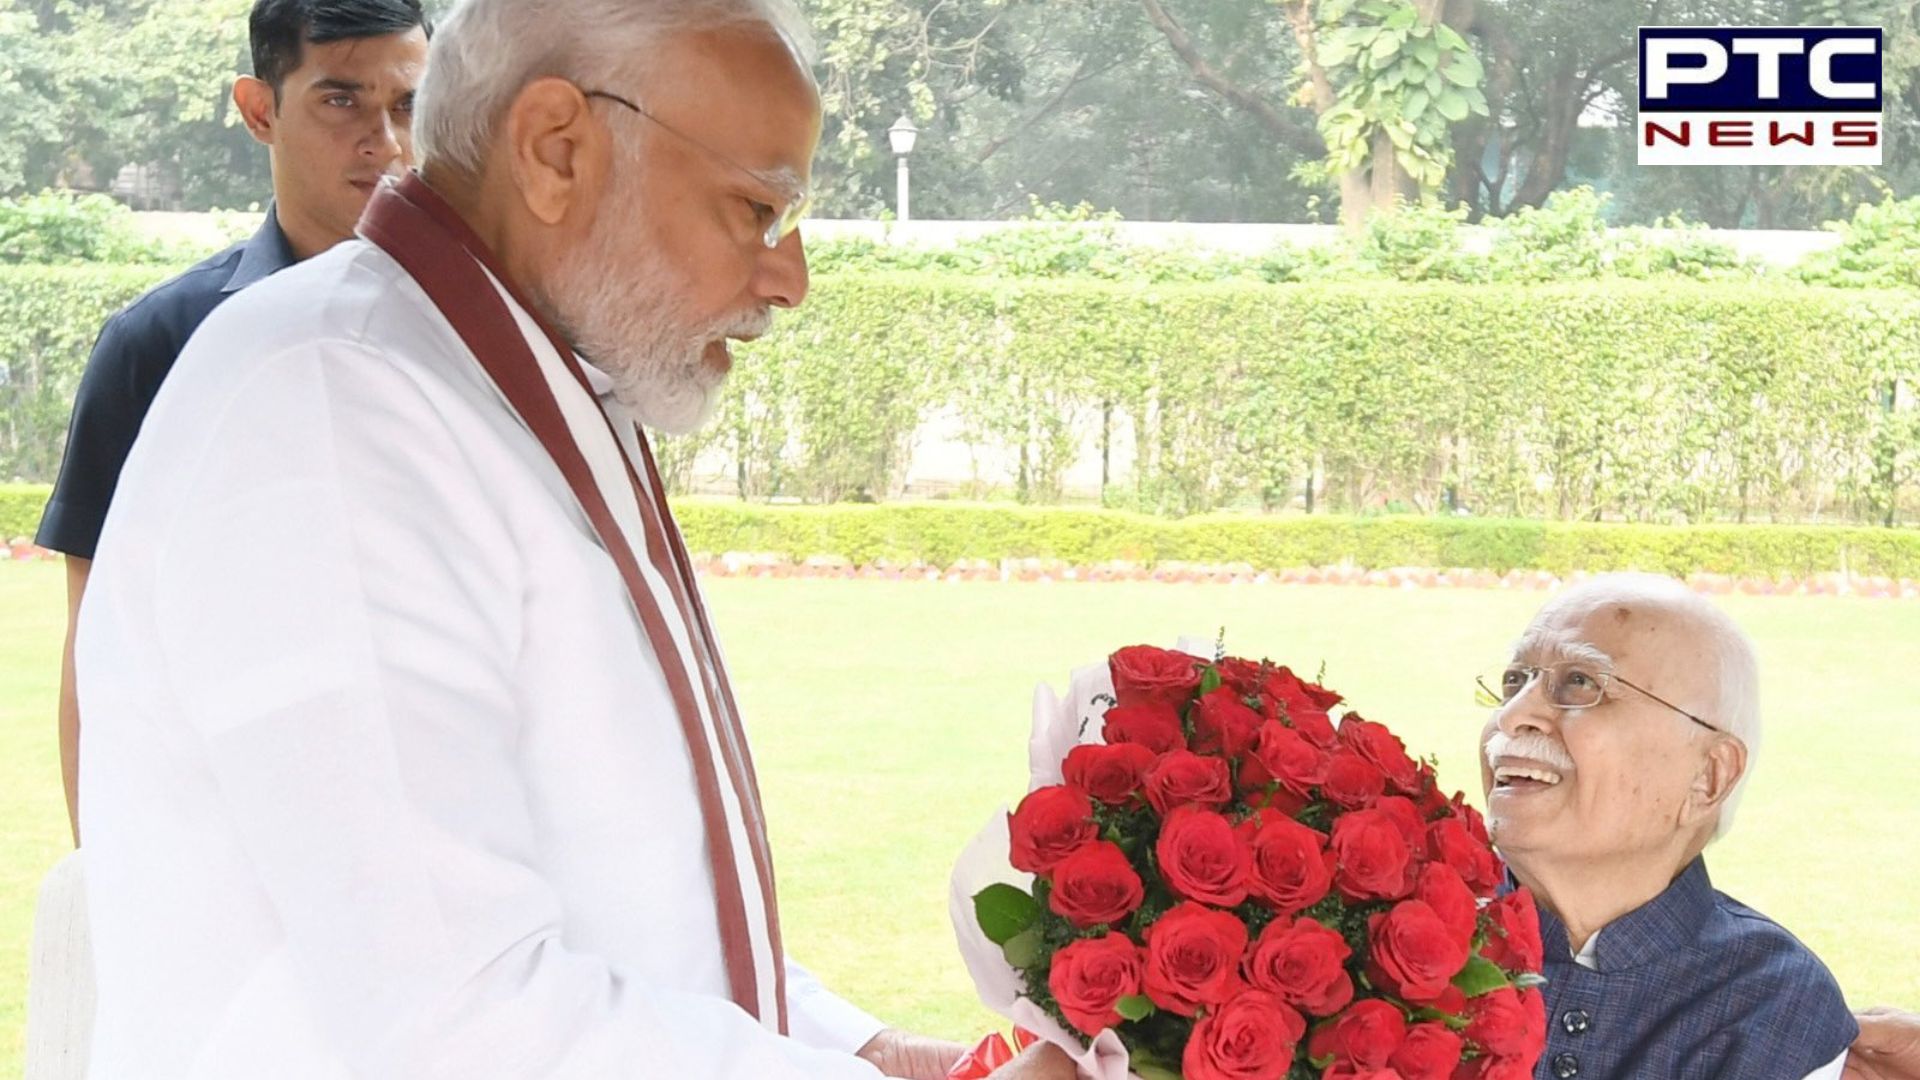 PM Modi announces Bharat Ratna for BJP stalwart LK Advani